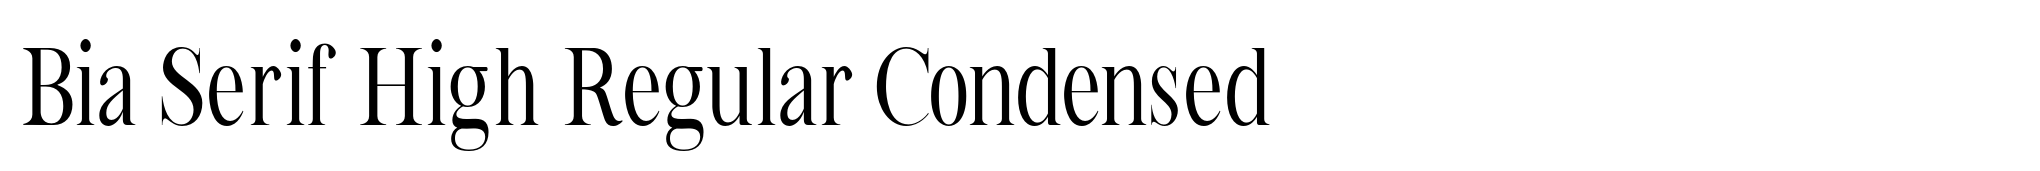 Bia Serif High Regular Condensed image